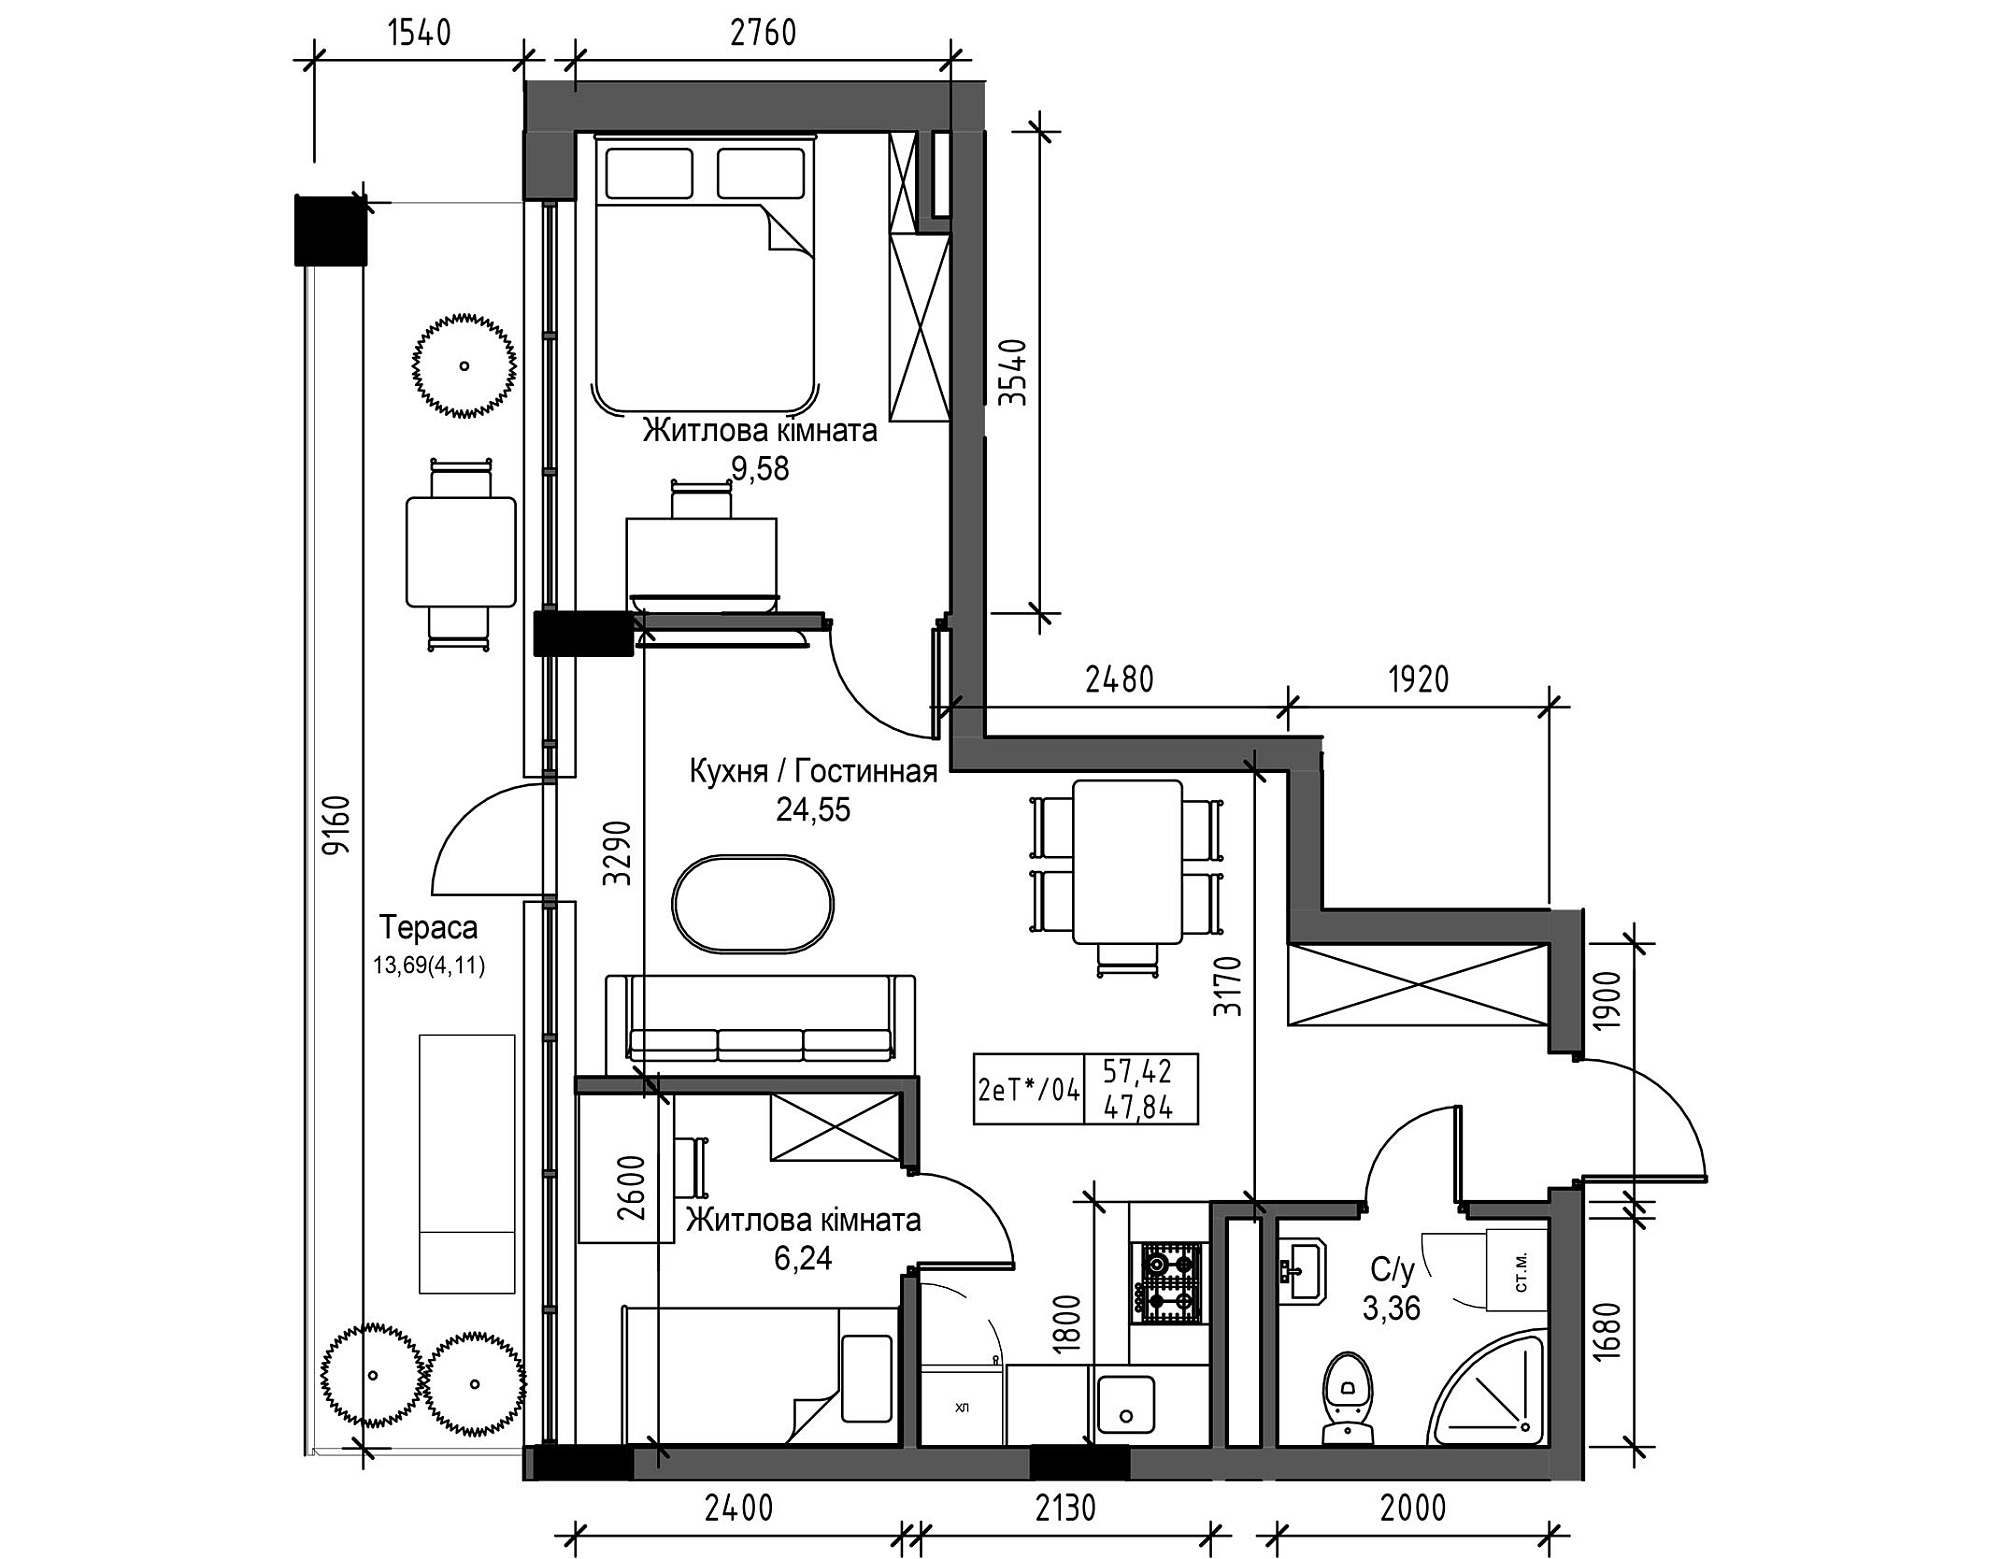 Планування 2-к квартира площею 47.59м2, UM-003-09/0100.